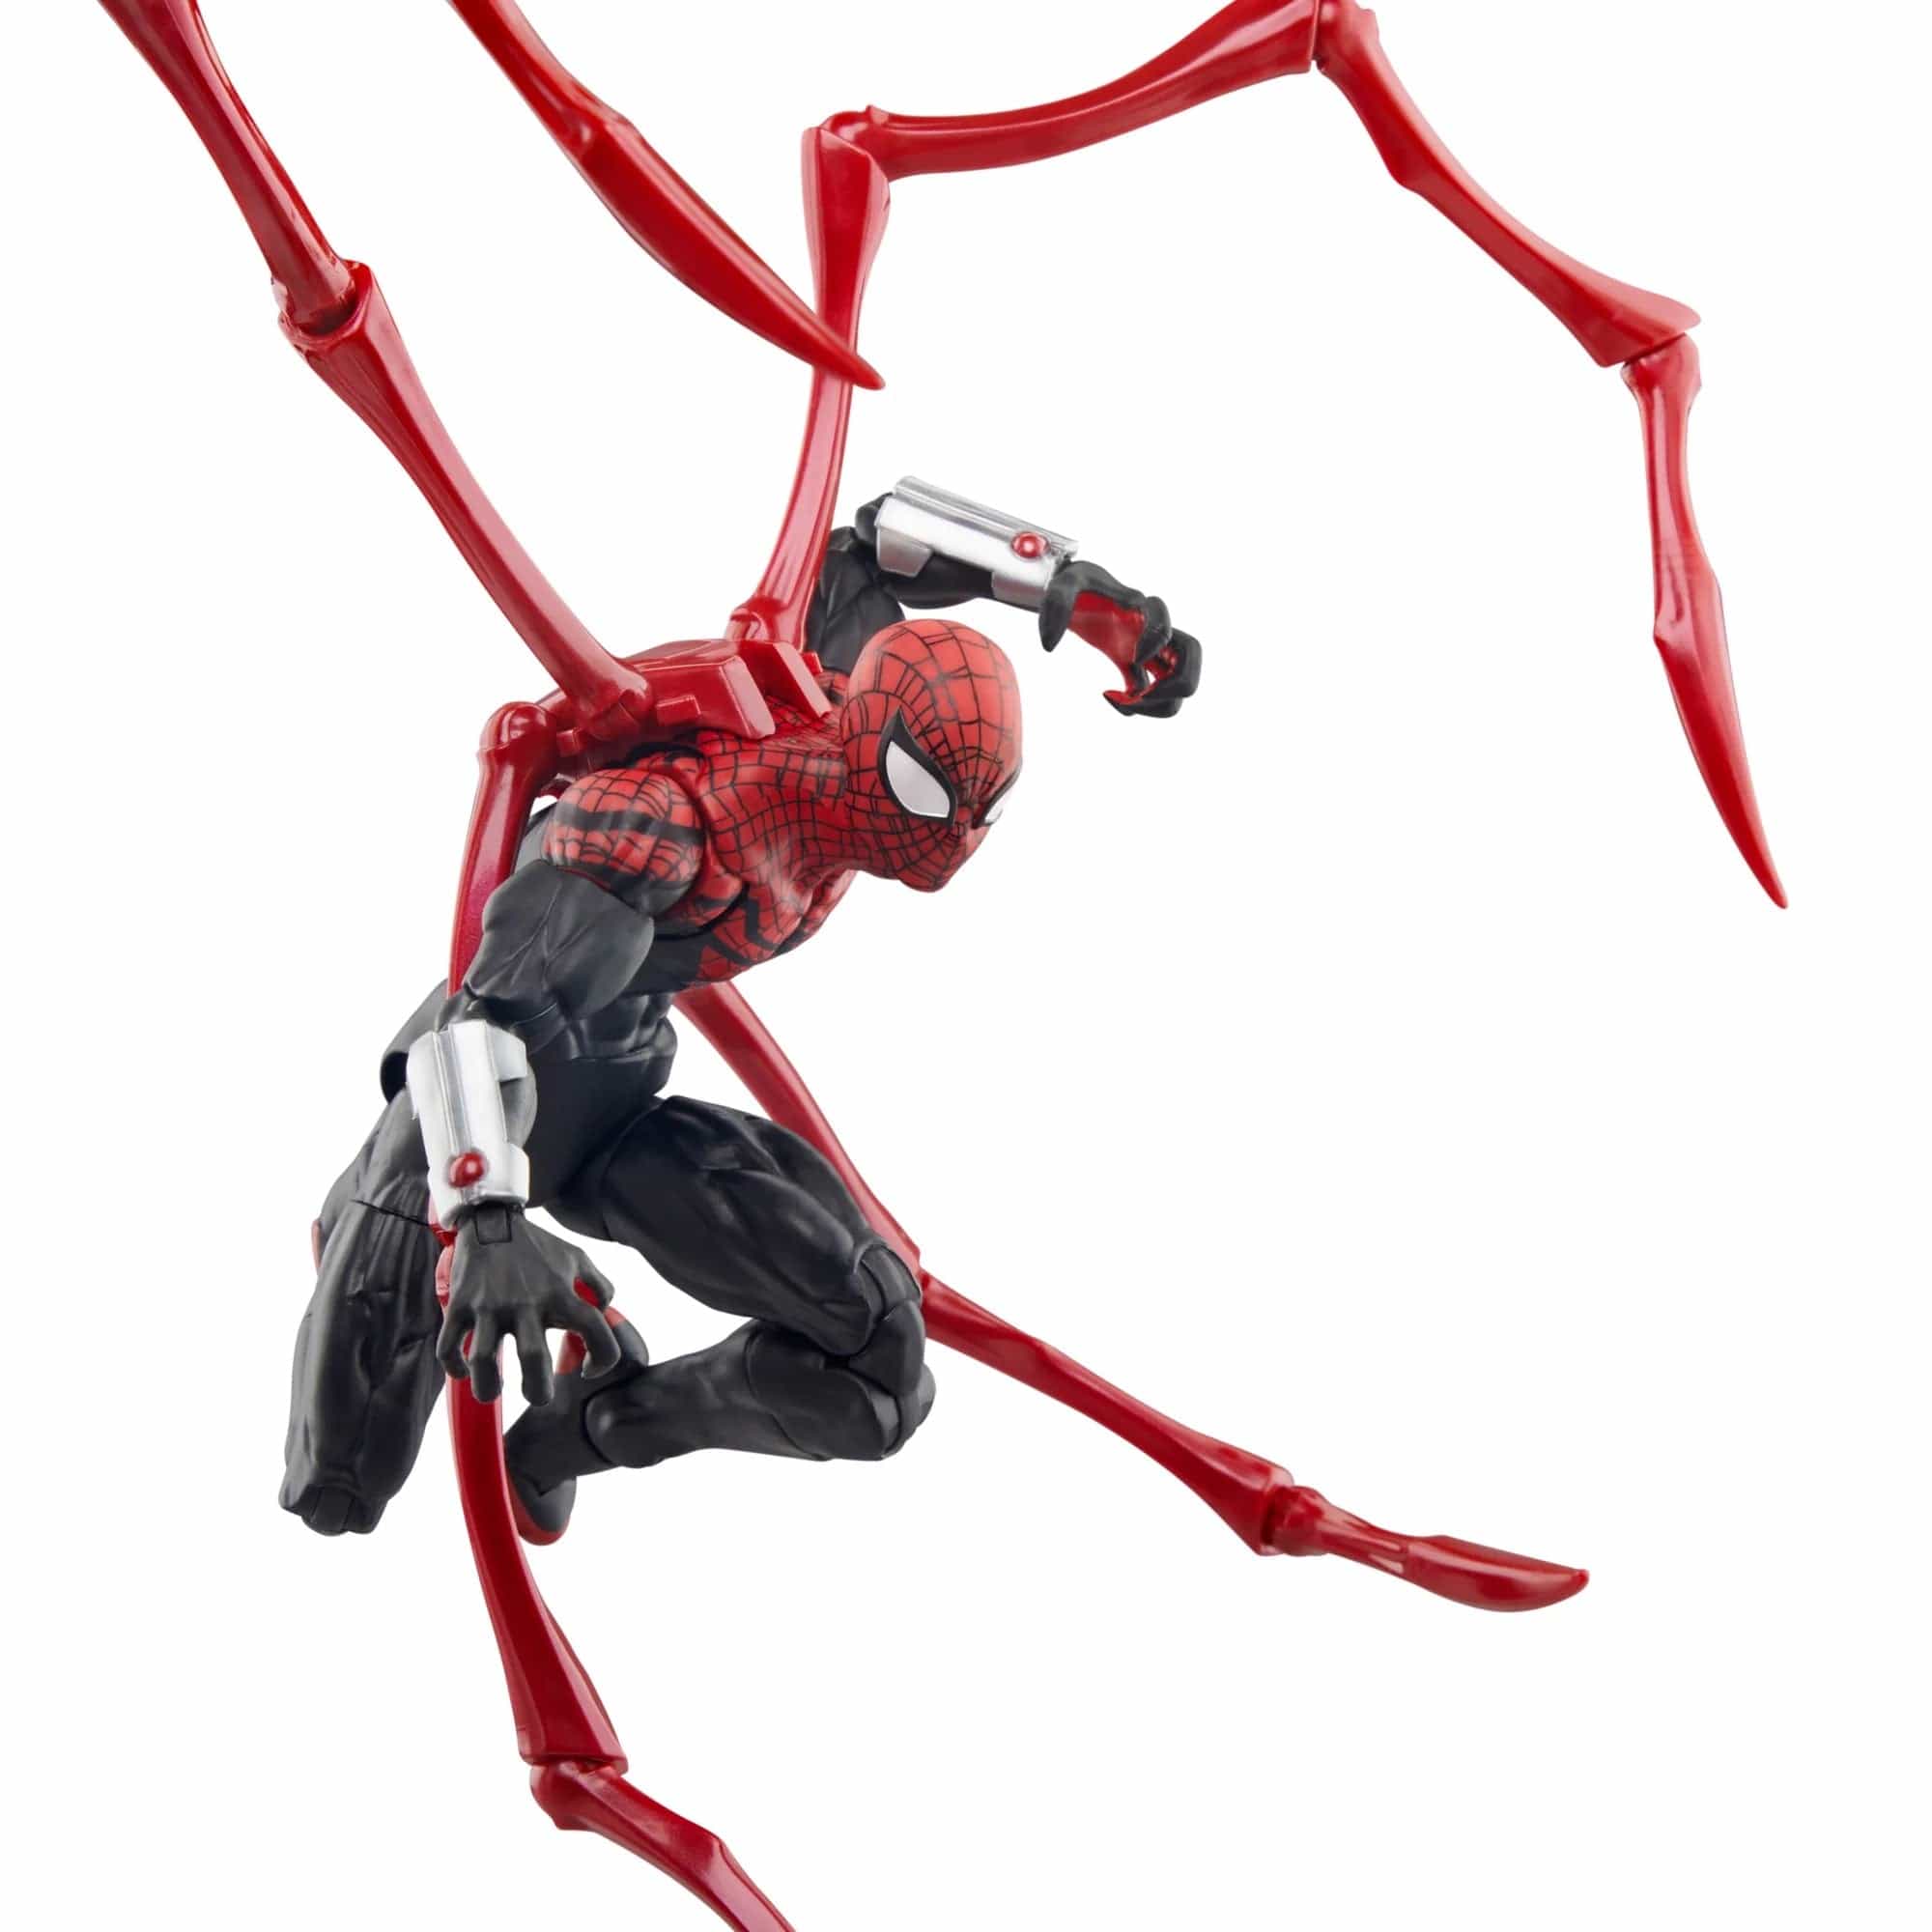 Hasbro Marvel Legends Series Superior Spider-Man Action Figure